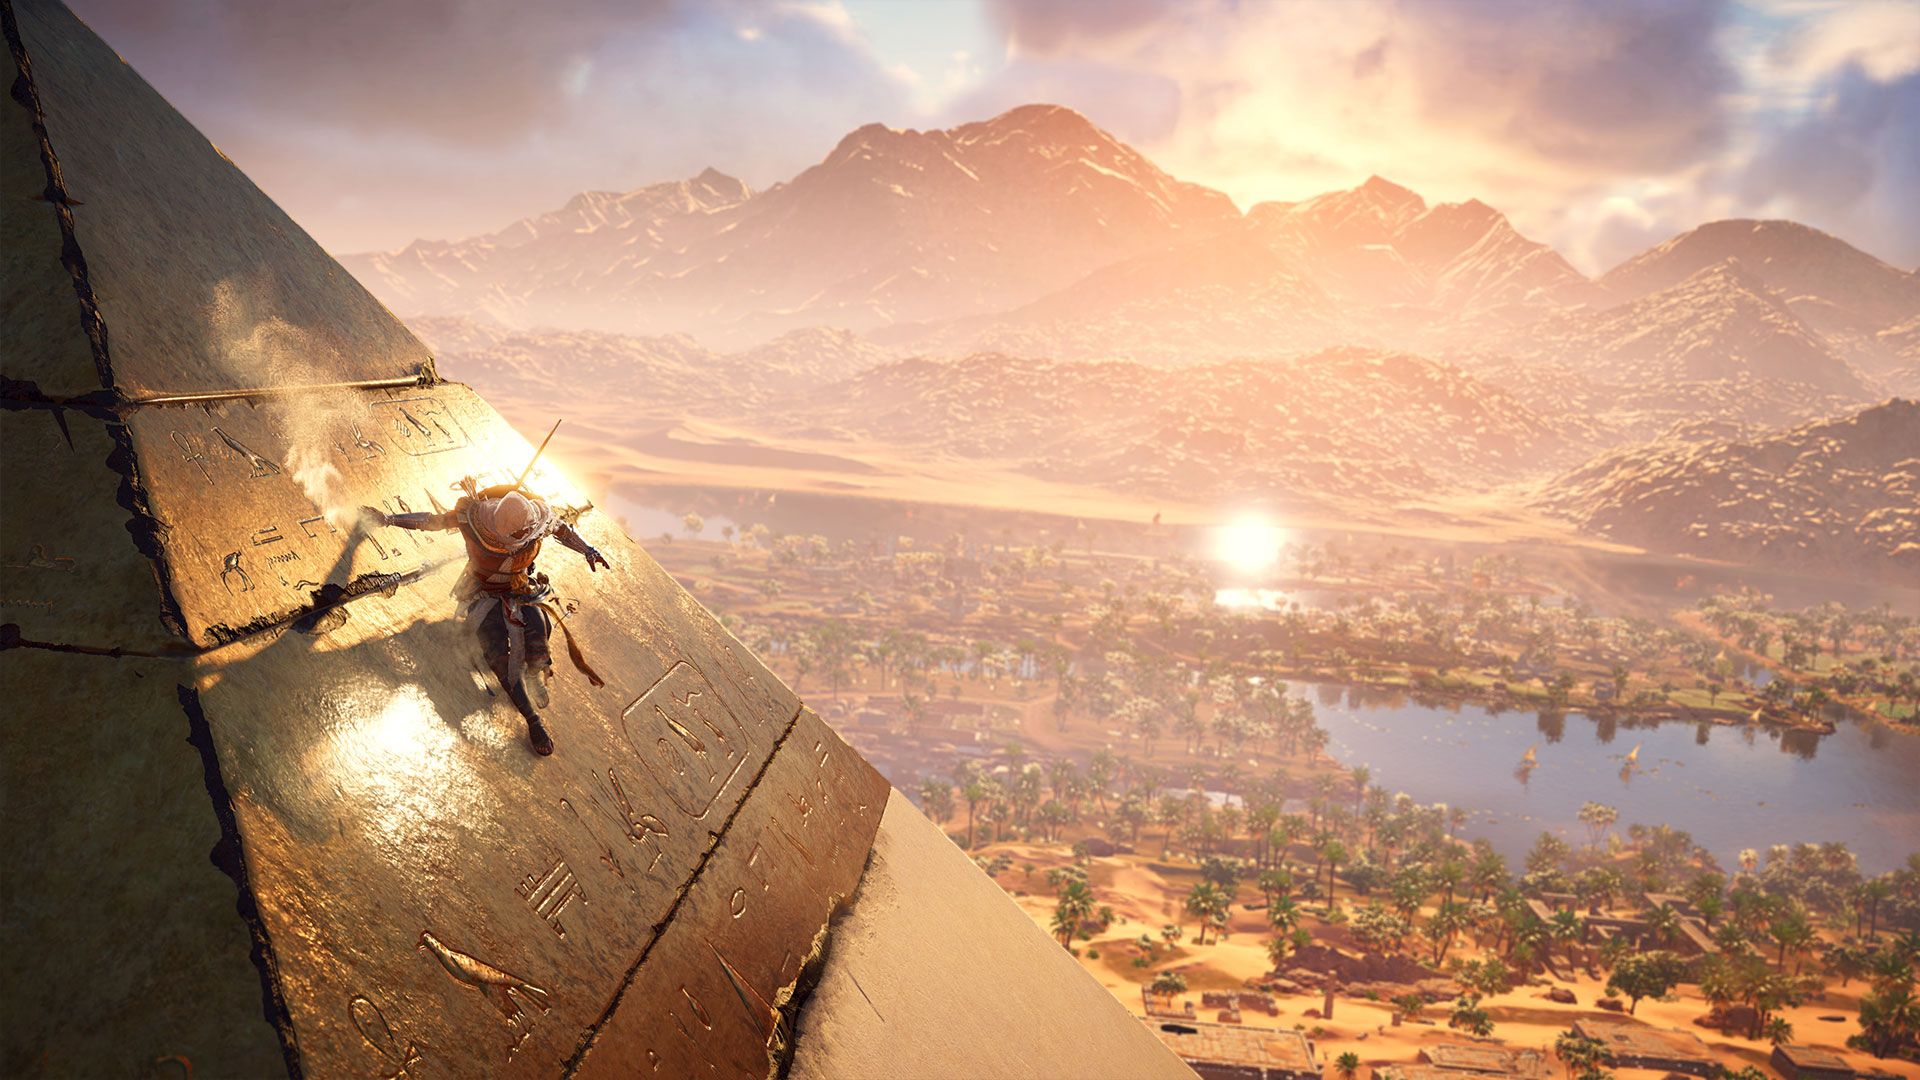 Assassins Creed Origins 1.60 Trainer +17 (FLiNG) - Free PC Cheats